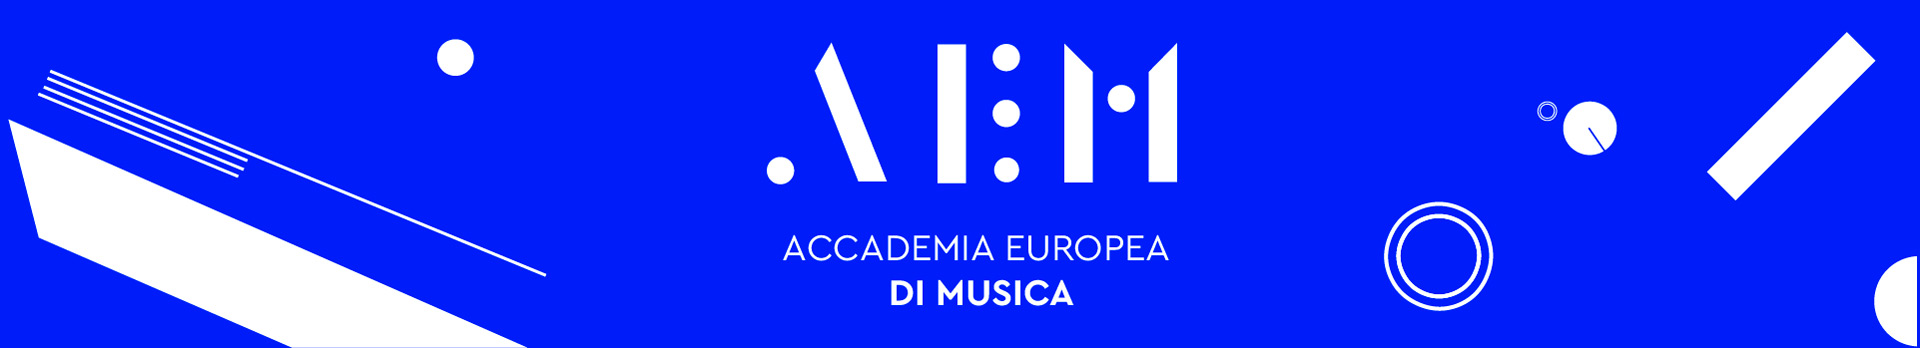 accademia-europea-di-musica-slide-1